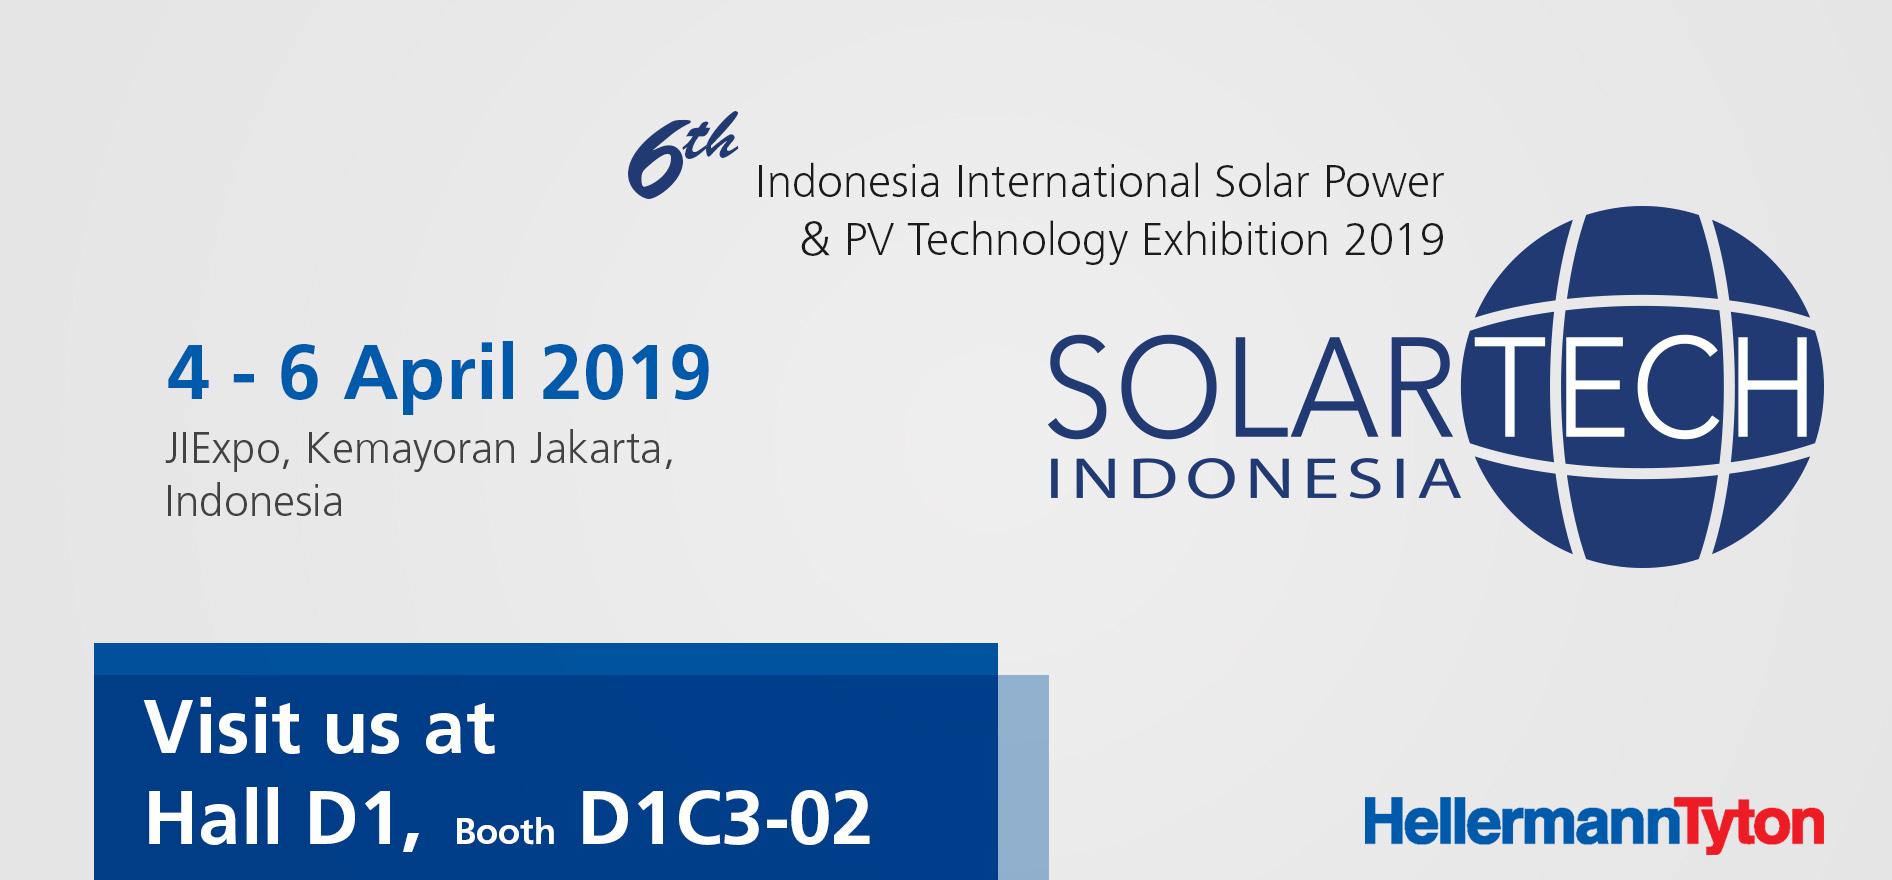 6th Indonesia International Solar Power & PV Technology Exhibition 2019